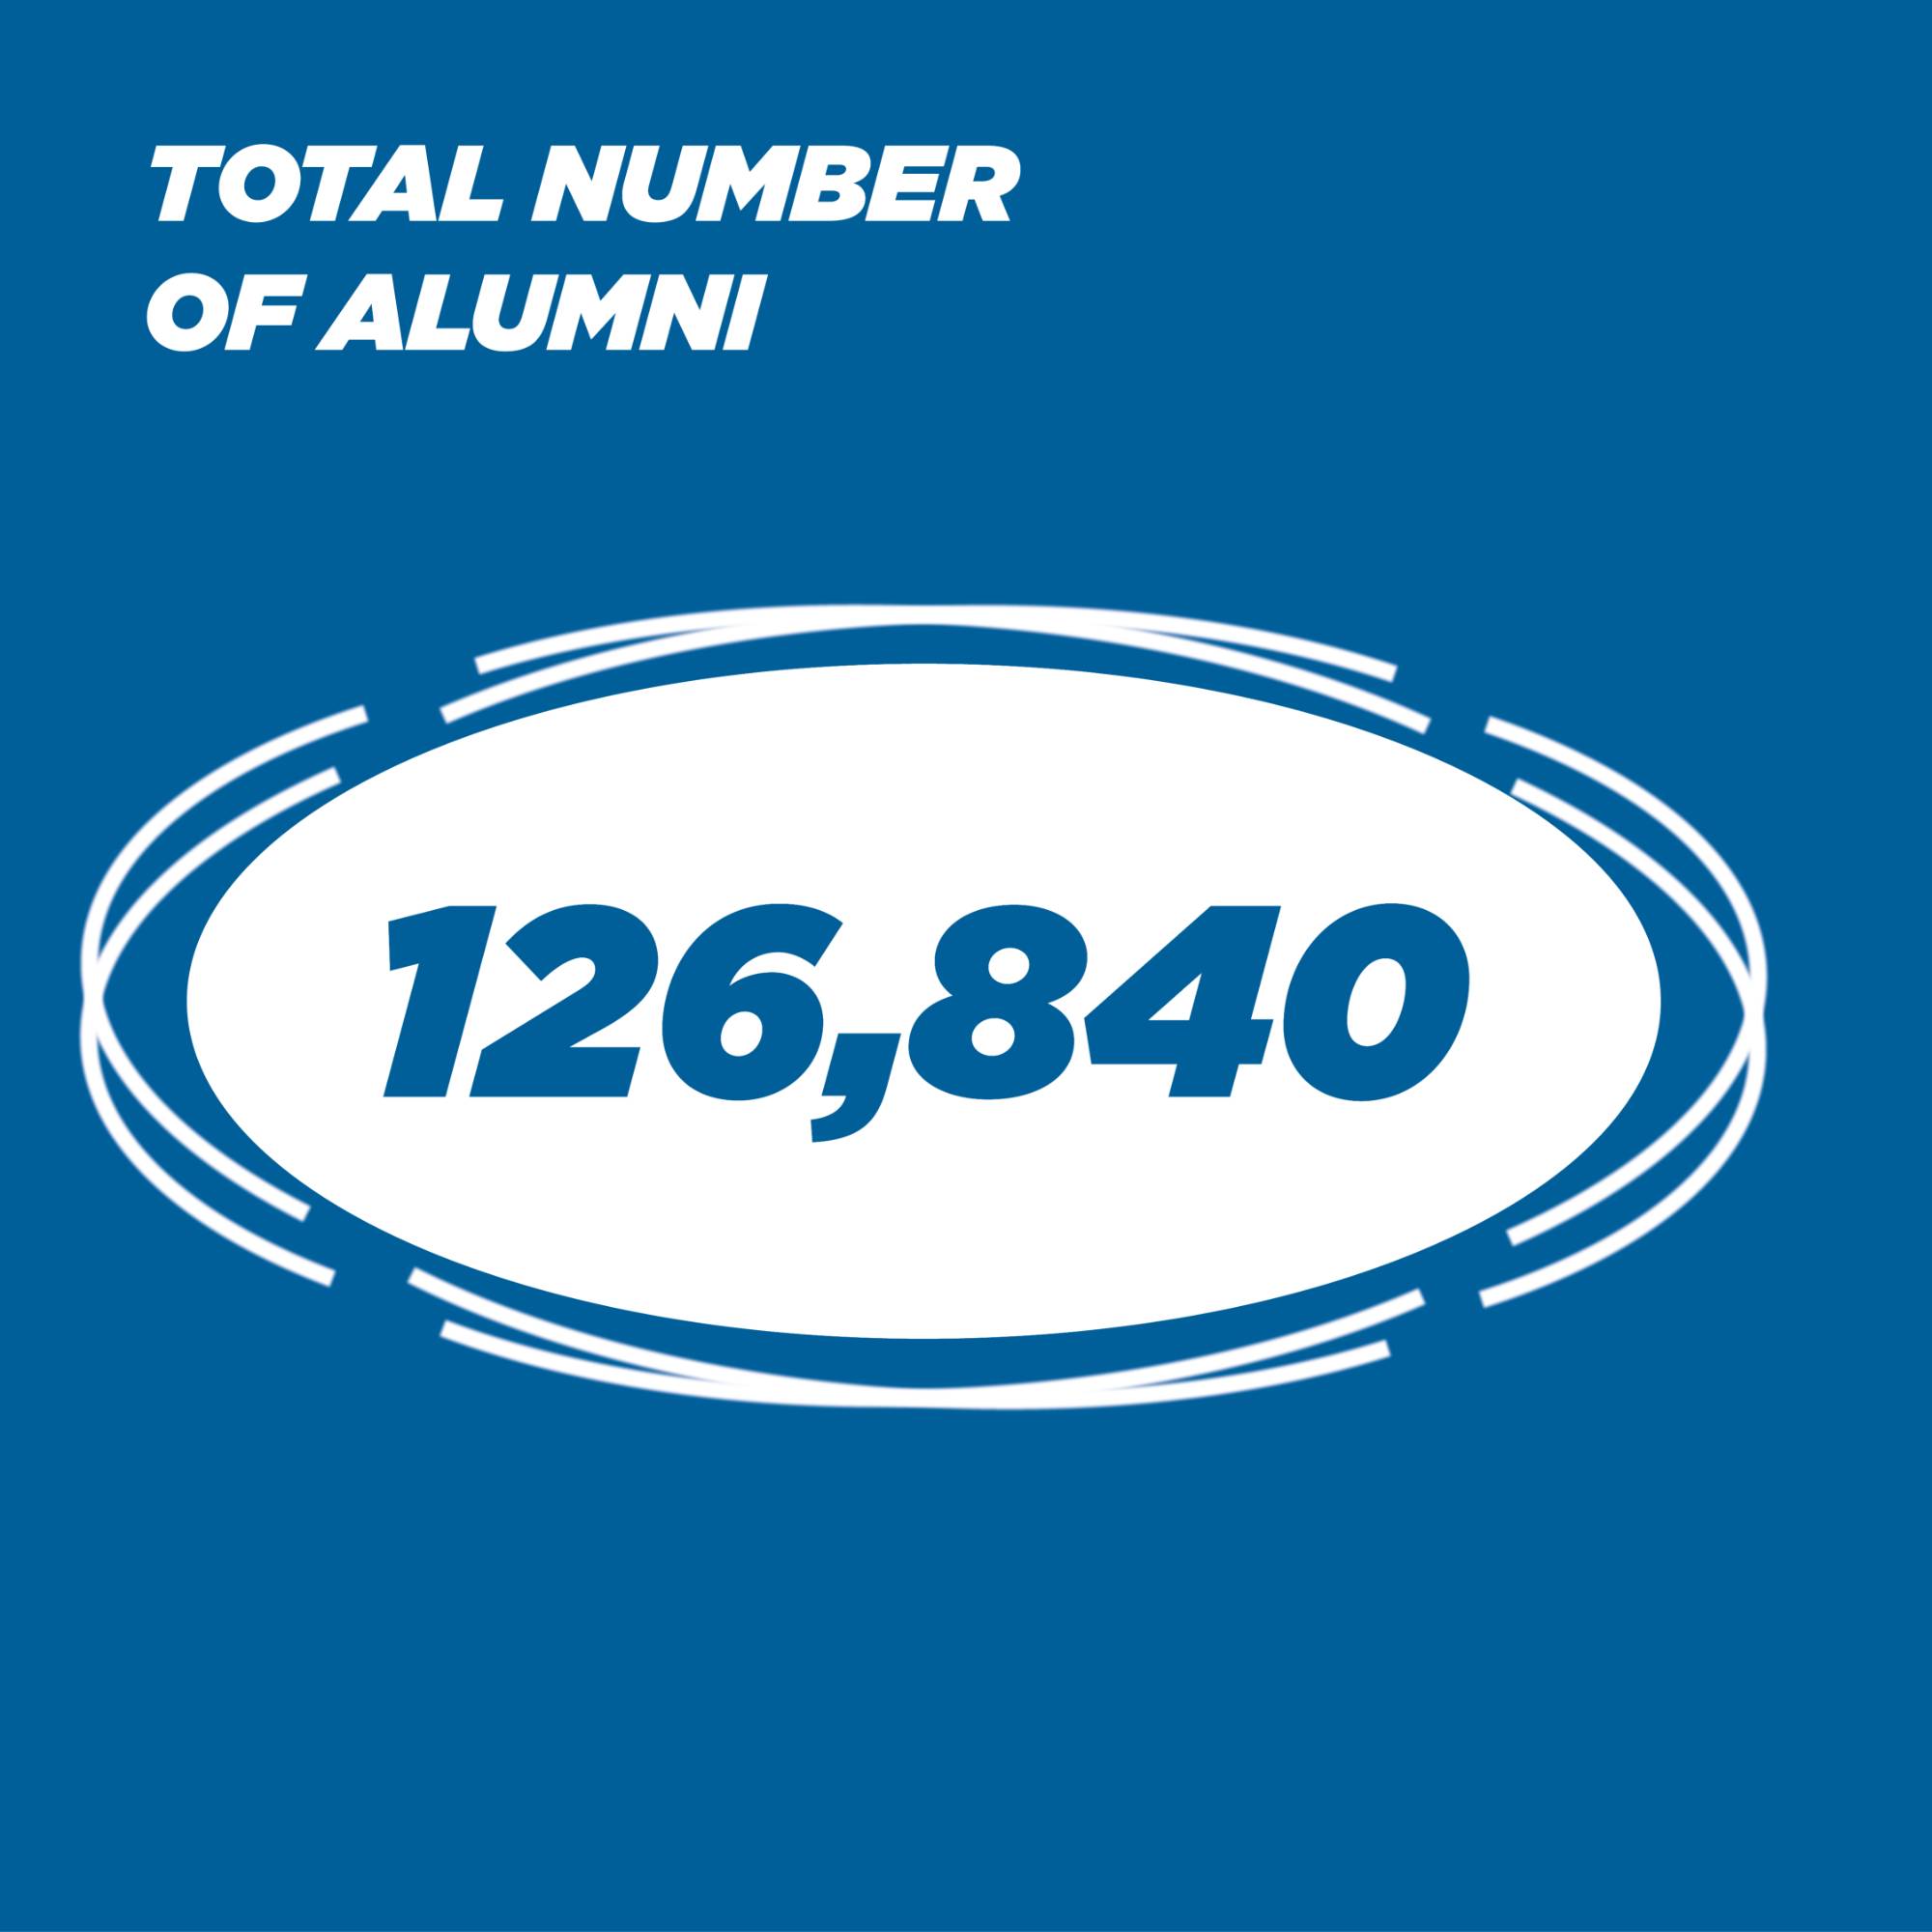 Total Number of Alumni 126,840